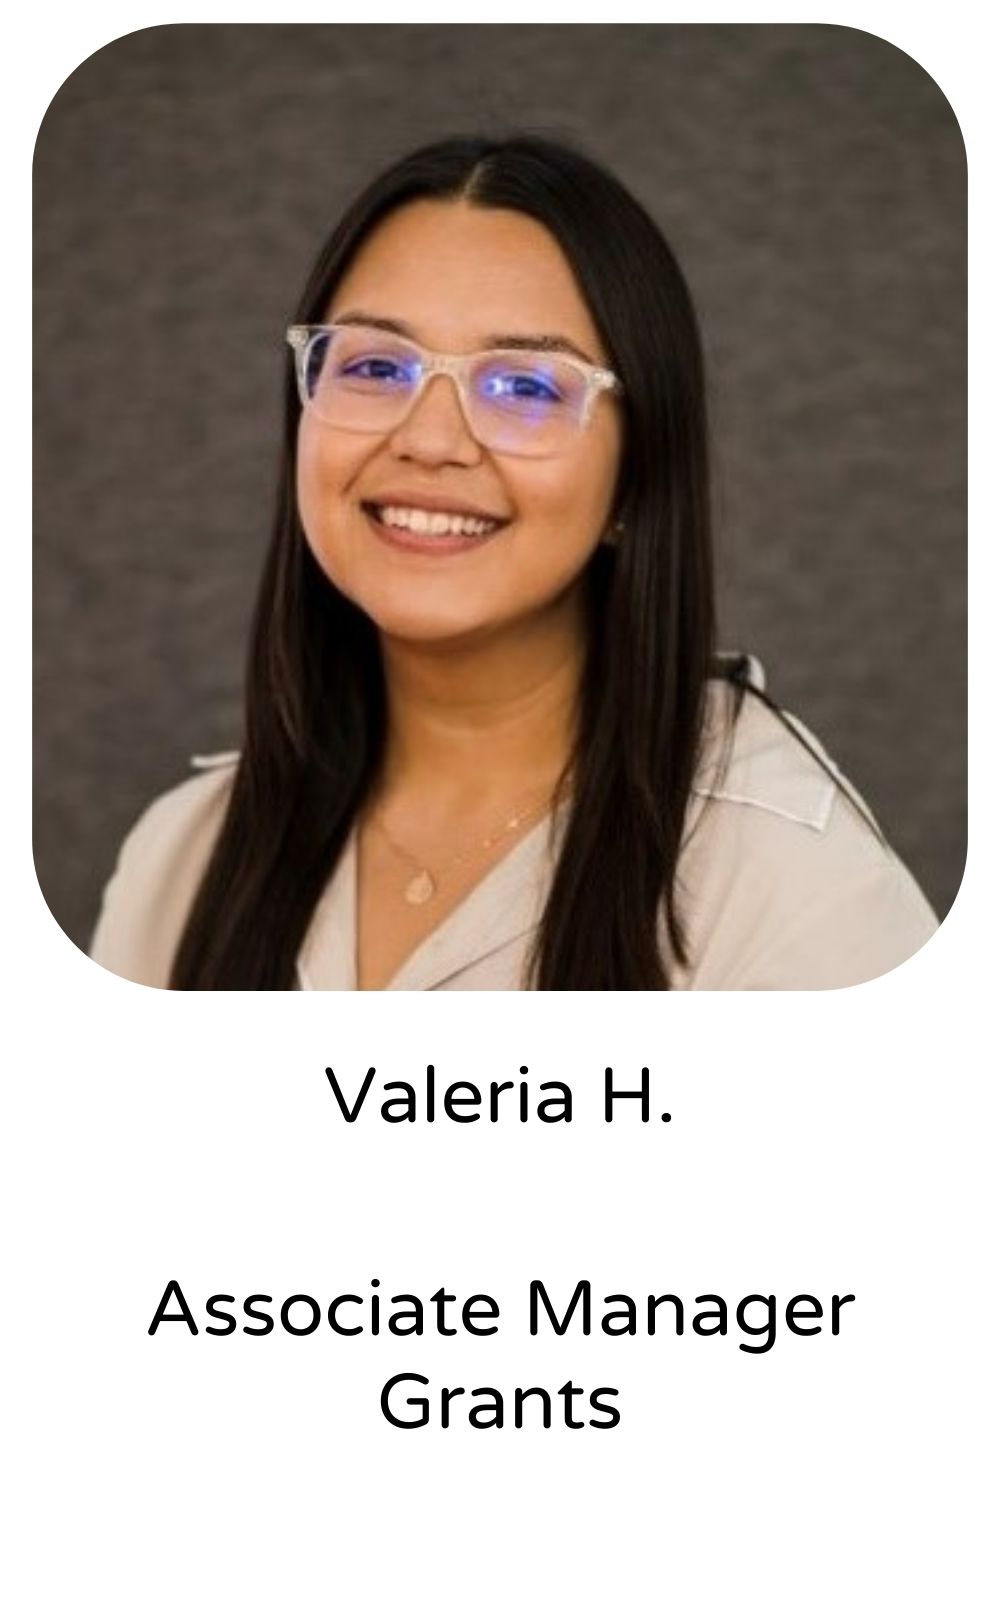 Valeria H, Associate Manager, Grants